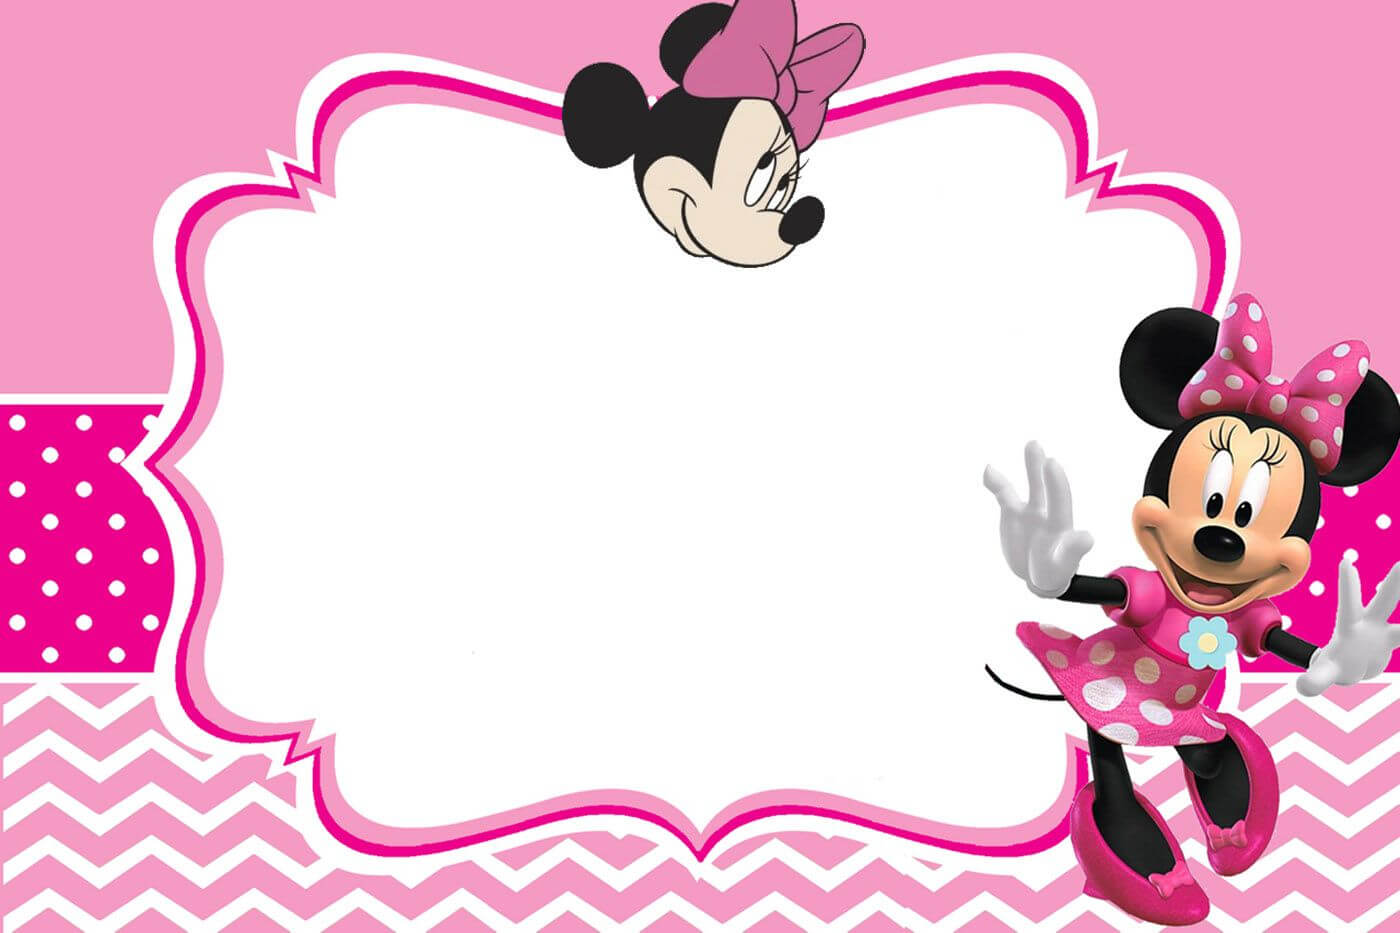 Minnie Mouse Invitation Card Design In 2019 | Minnie Mouse For Minnie Mouse Card Templates